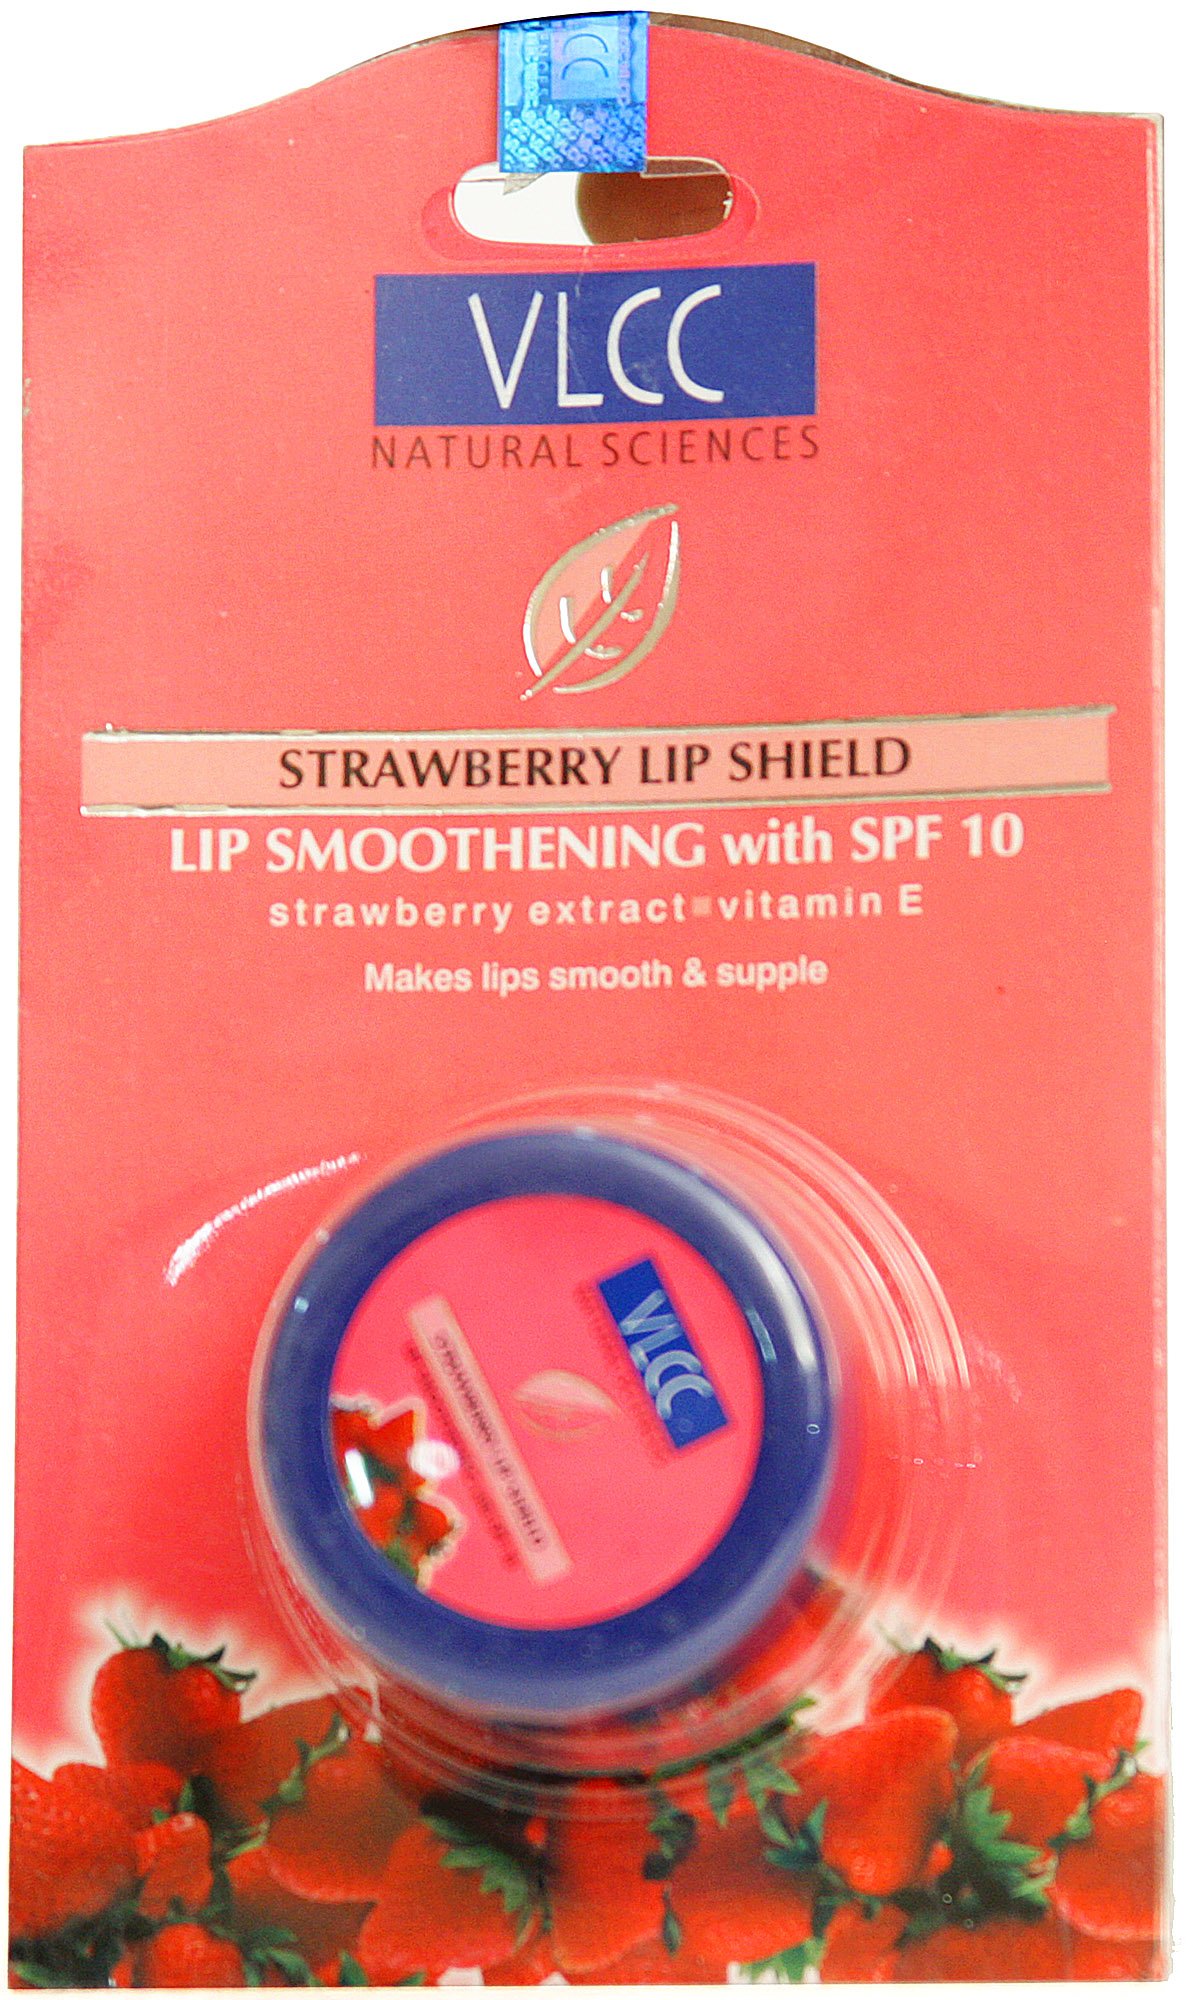 Strawberry Lip Shield: Lip Replenishing With SPF 10 - book cover